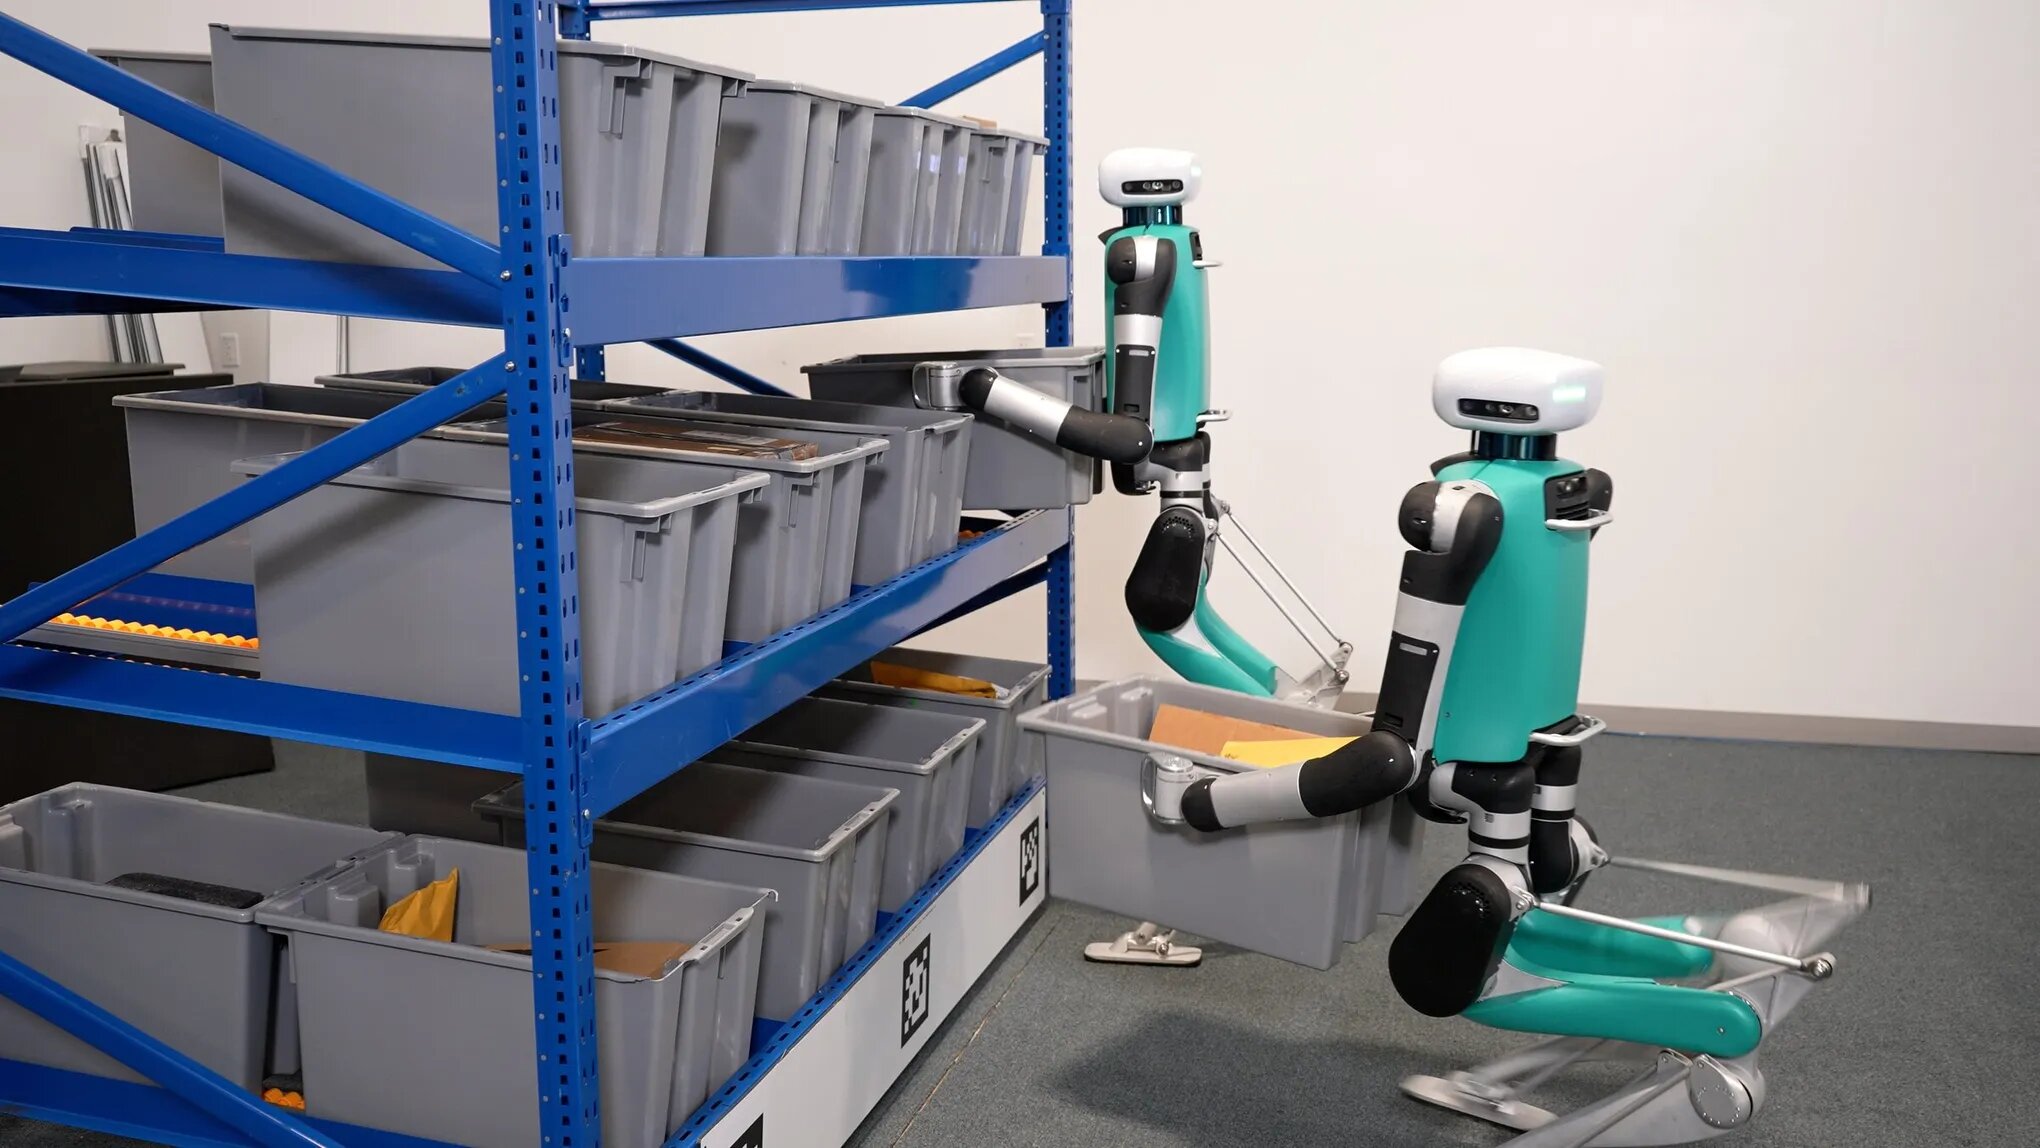 Robots organizing inventory bins at various heights.